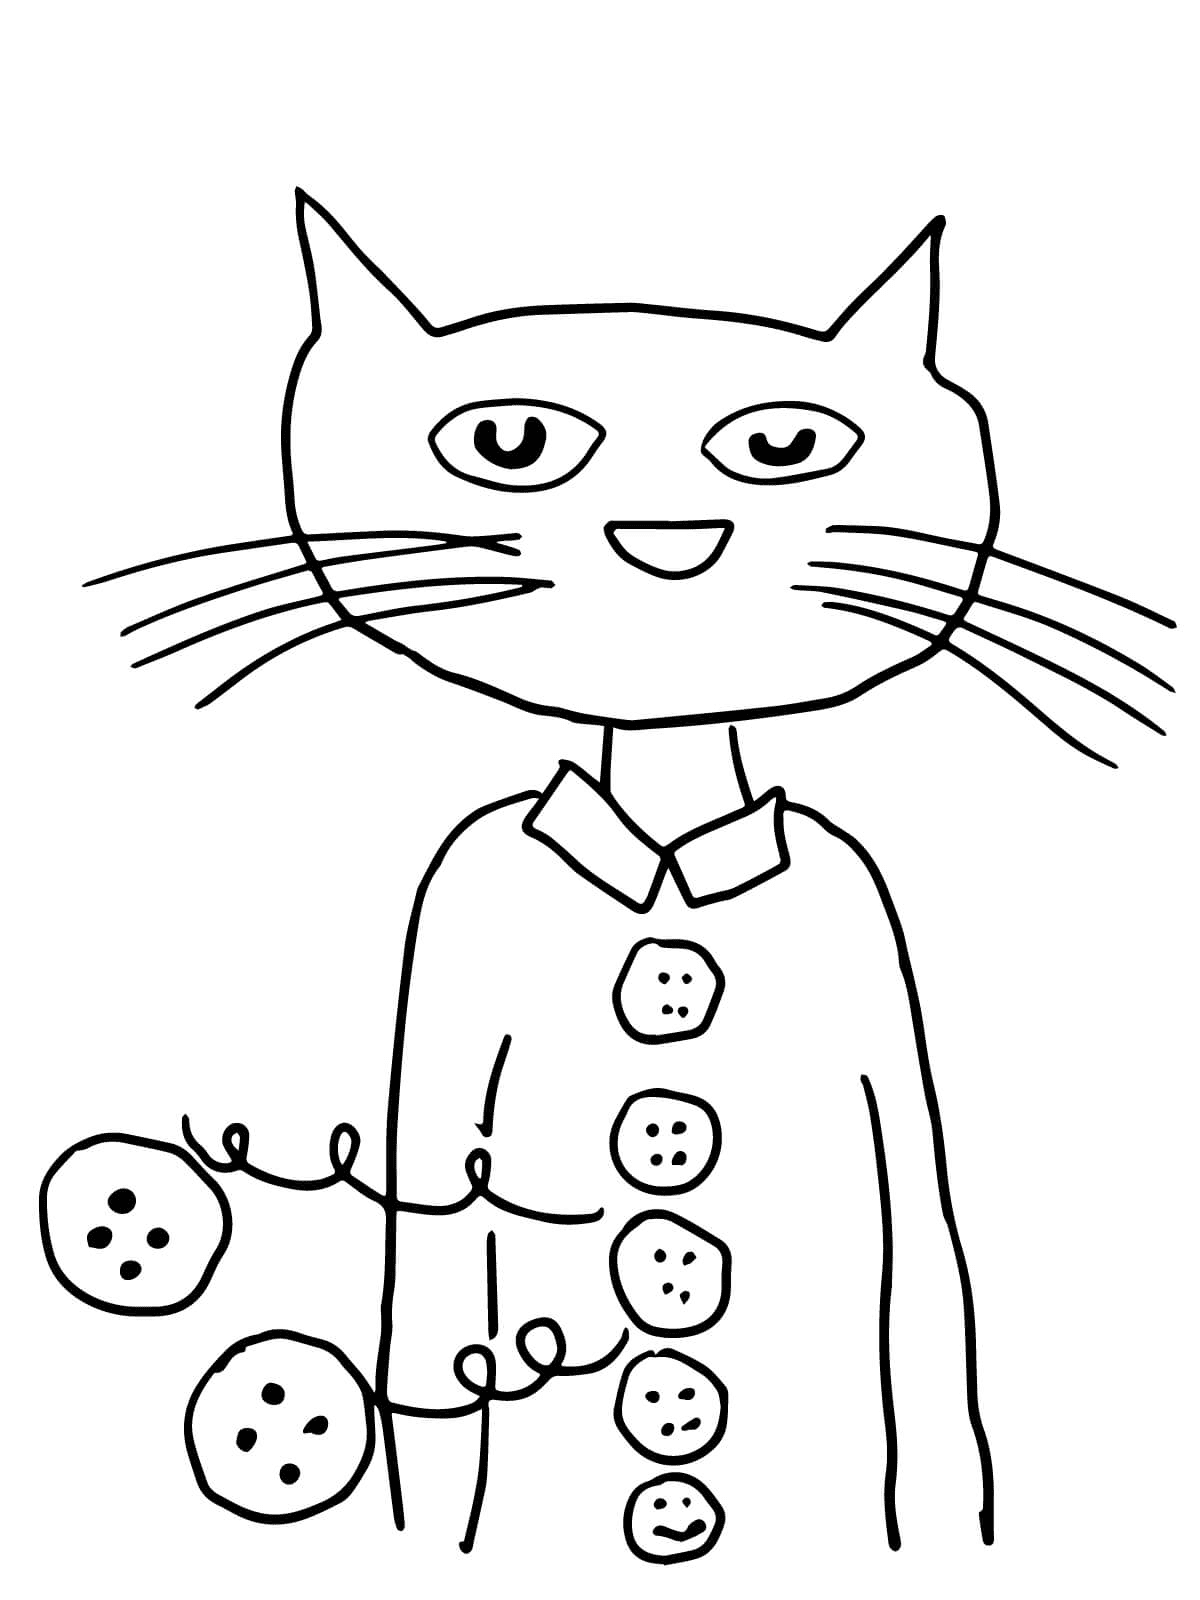 Página para colorir Pete the Cat Groovy Buttons